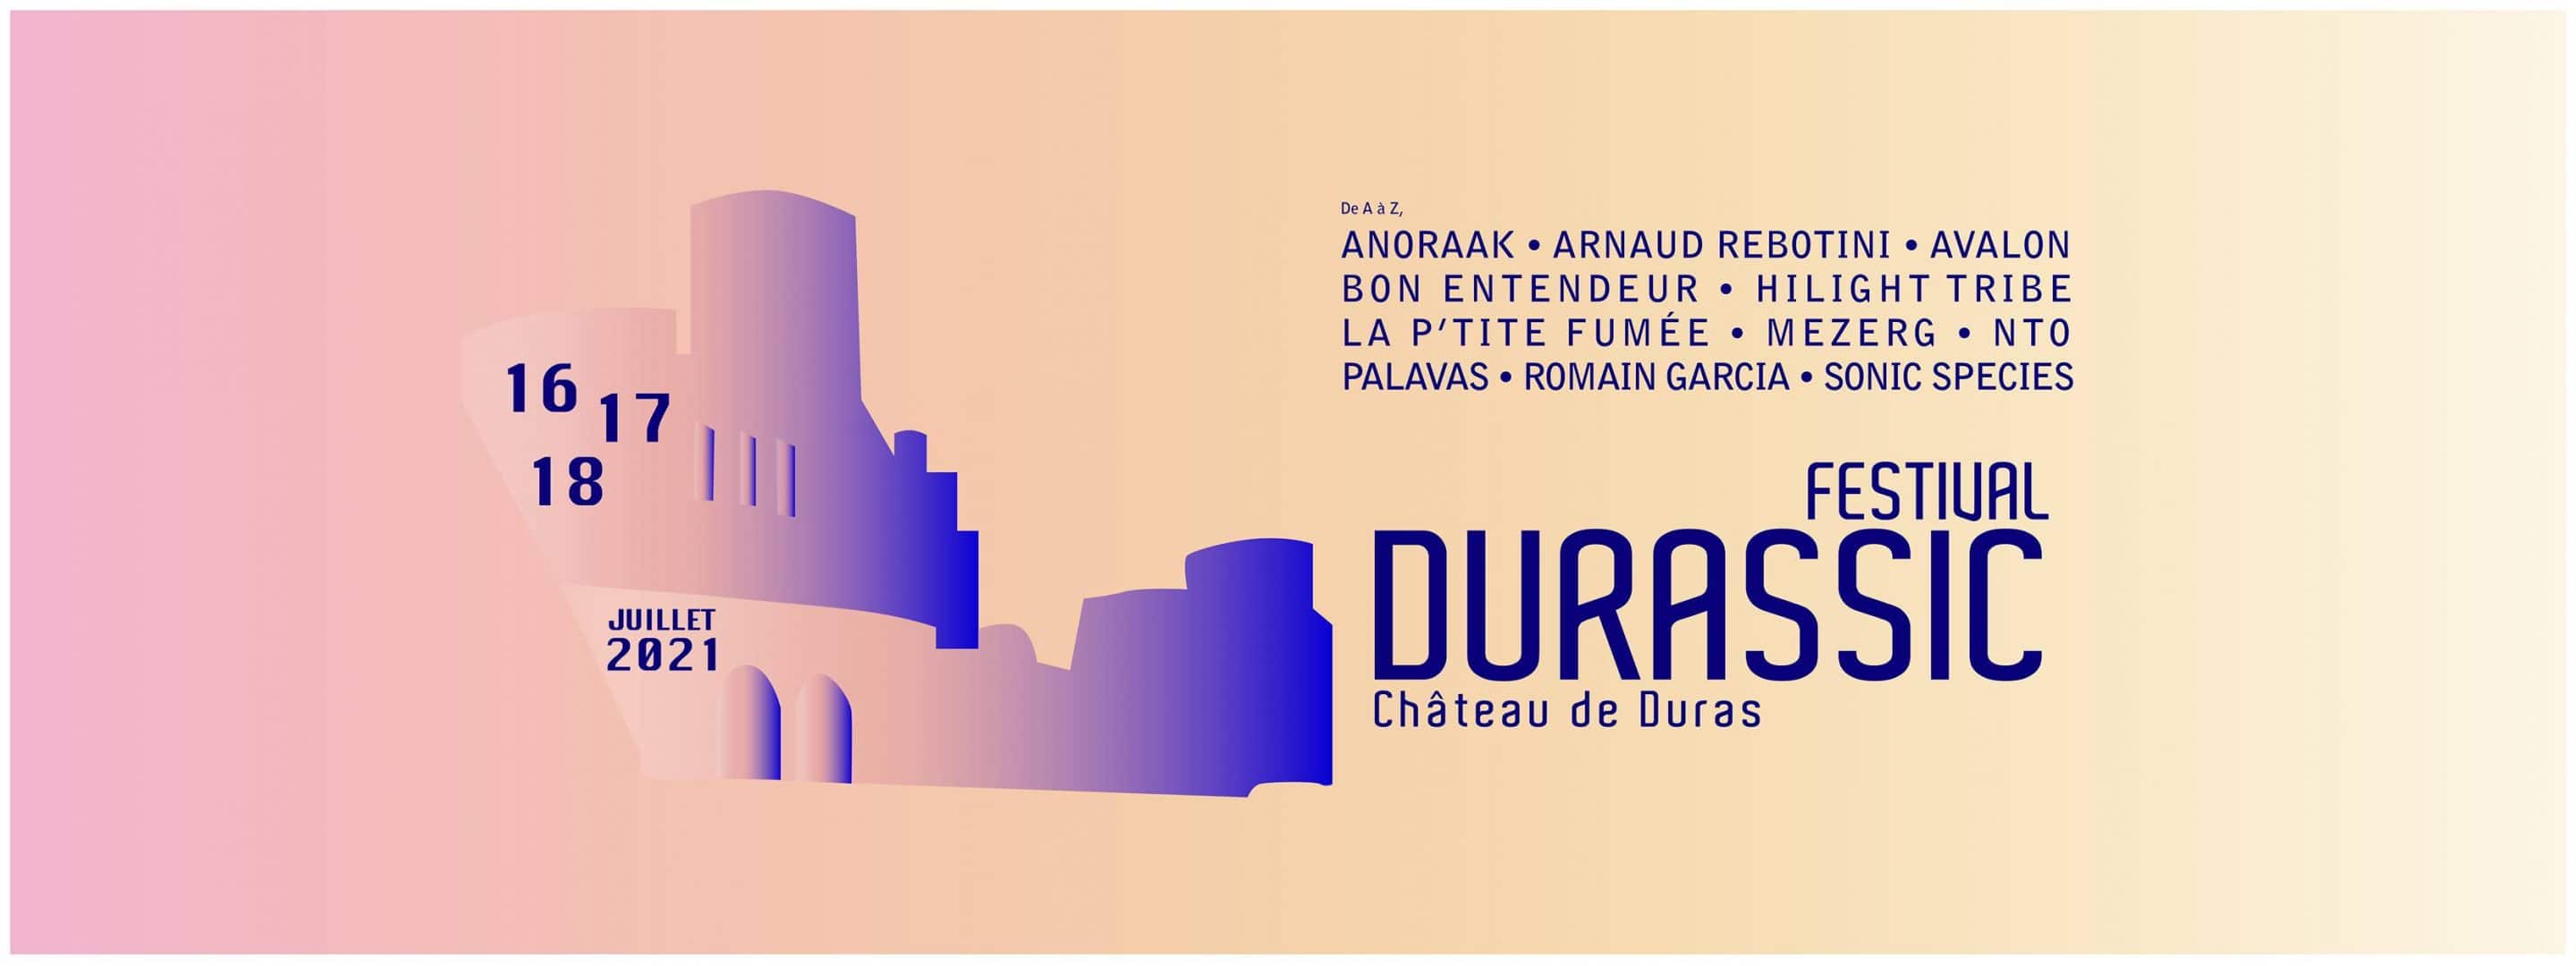 Affiche du Durassic Festival 2021